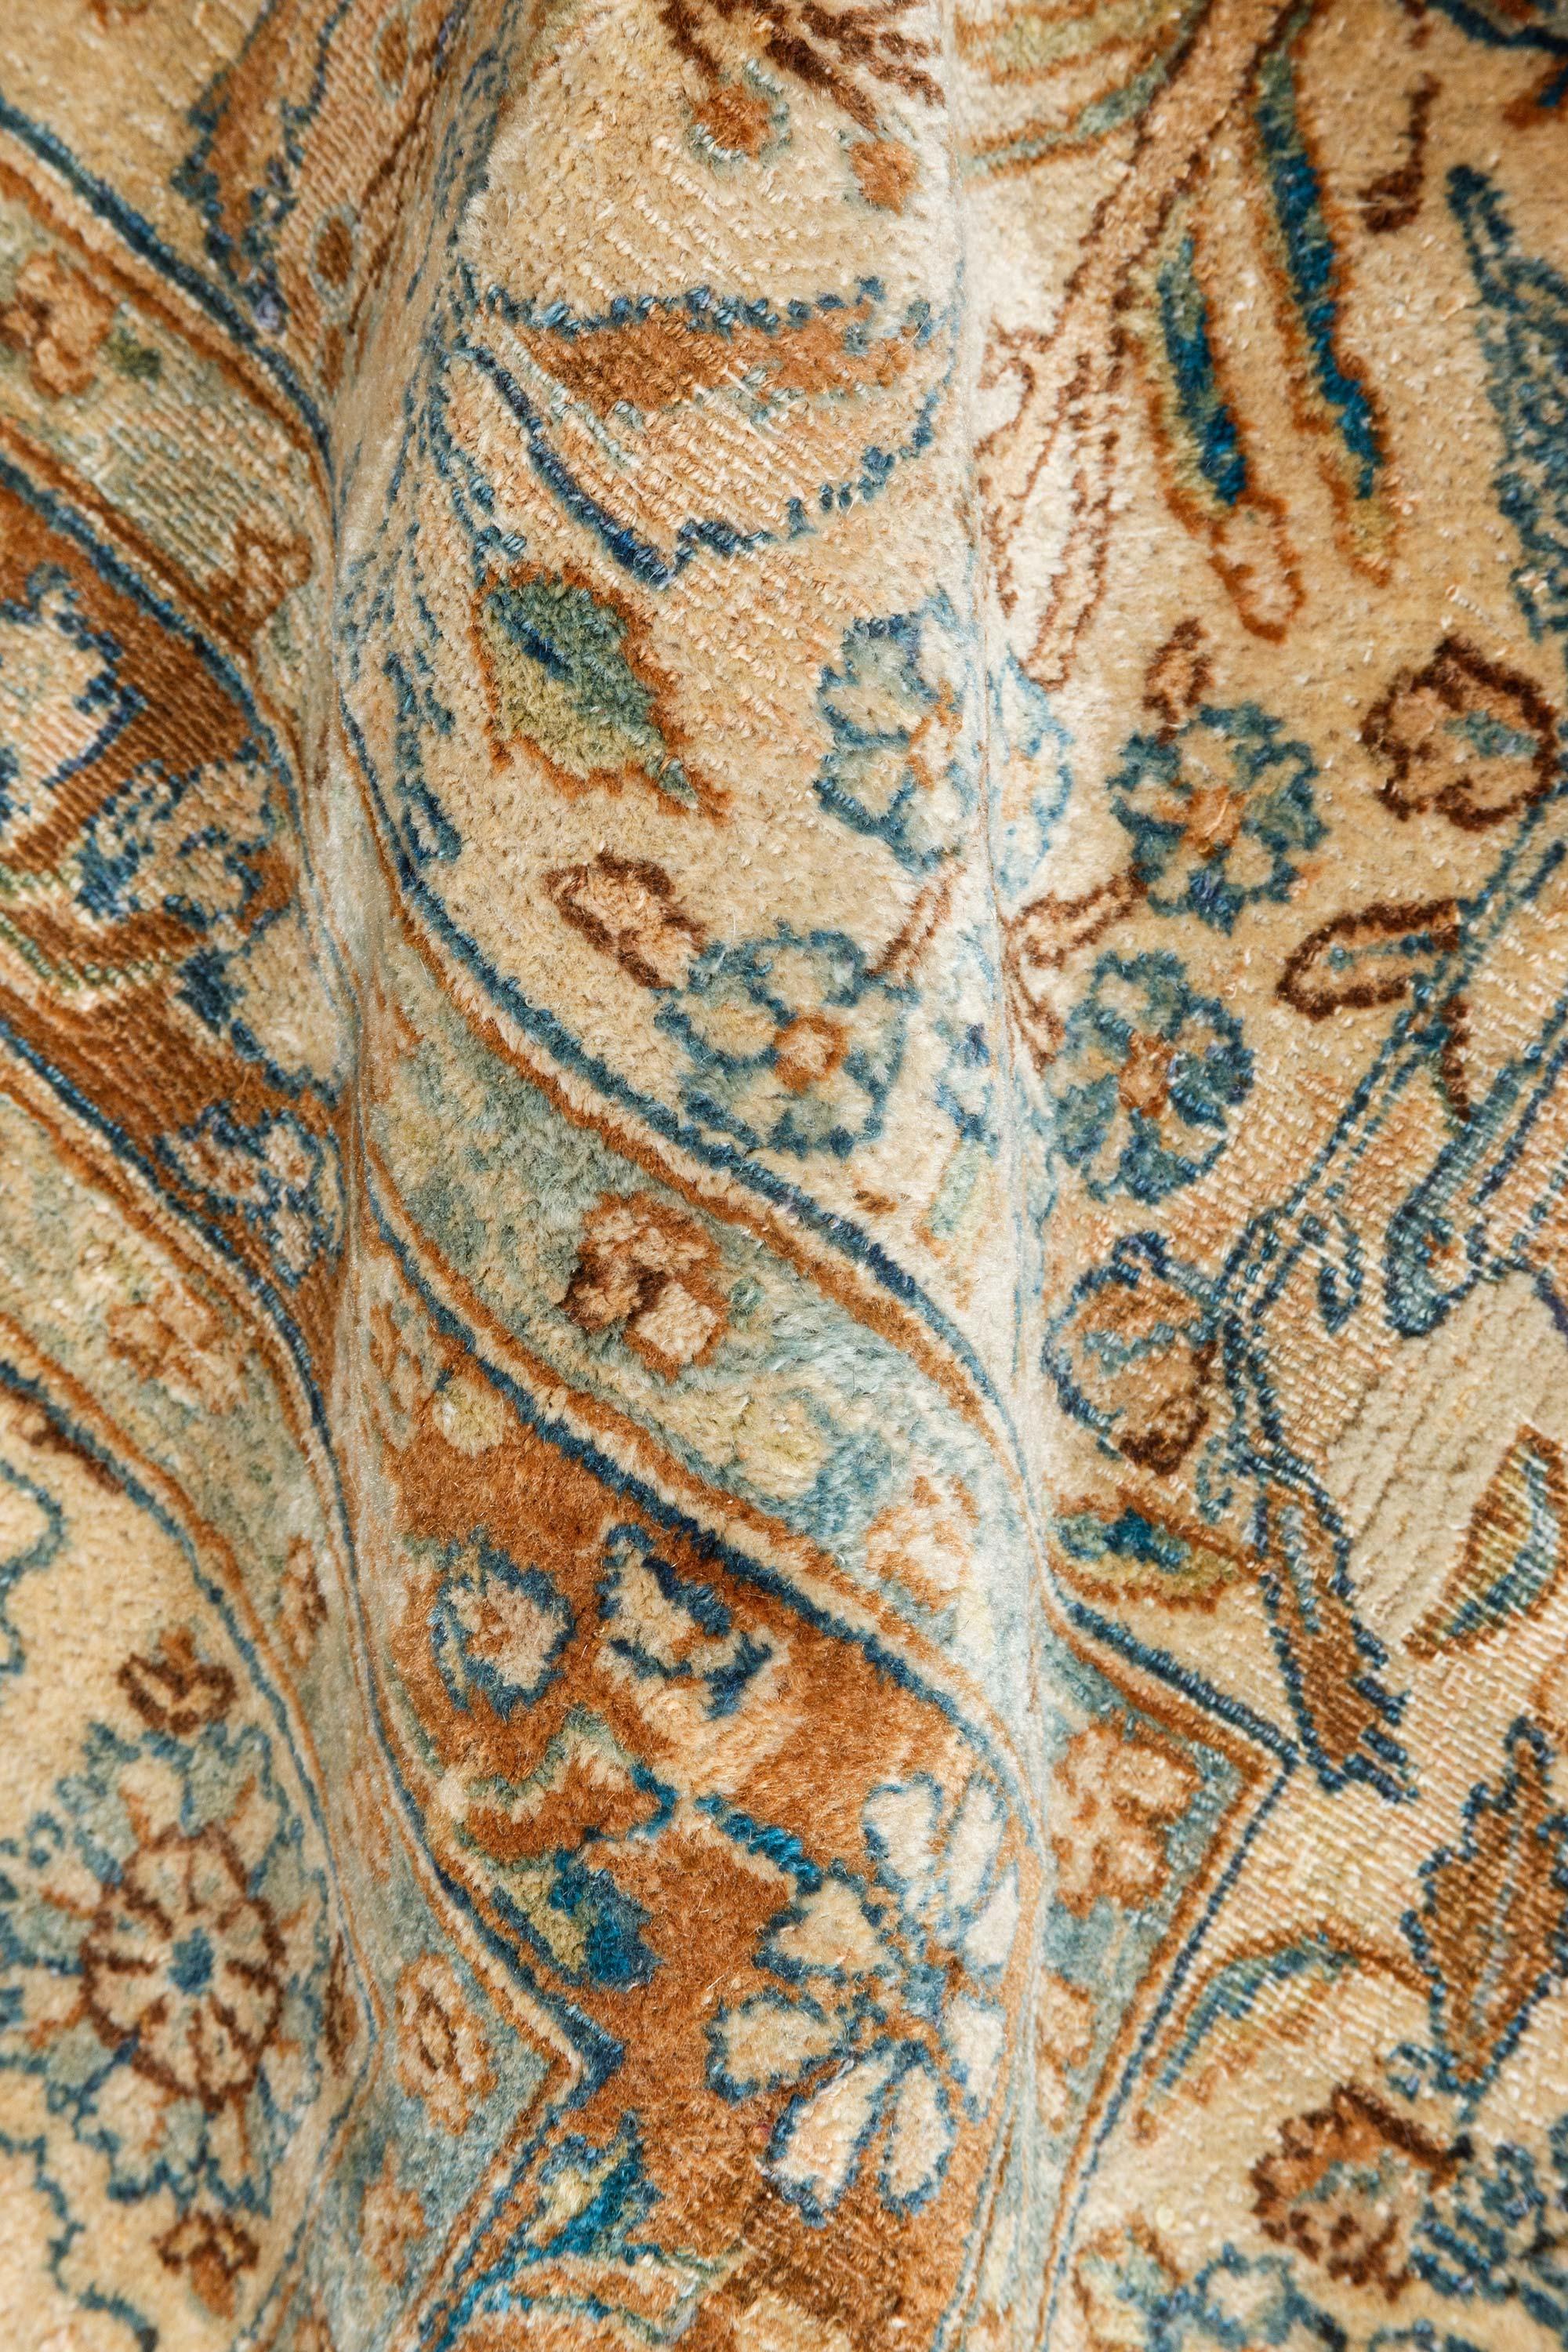 Authentic Early 20th century Persian Kirman handmade wool rug
Size: 9'8